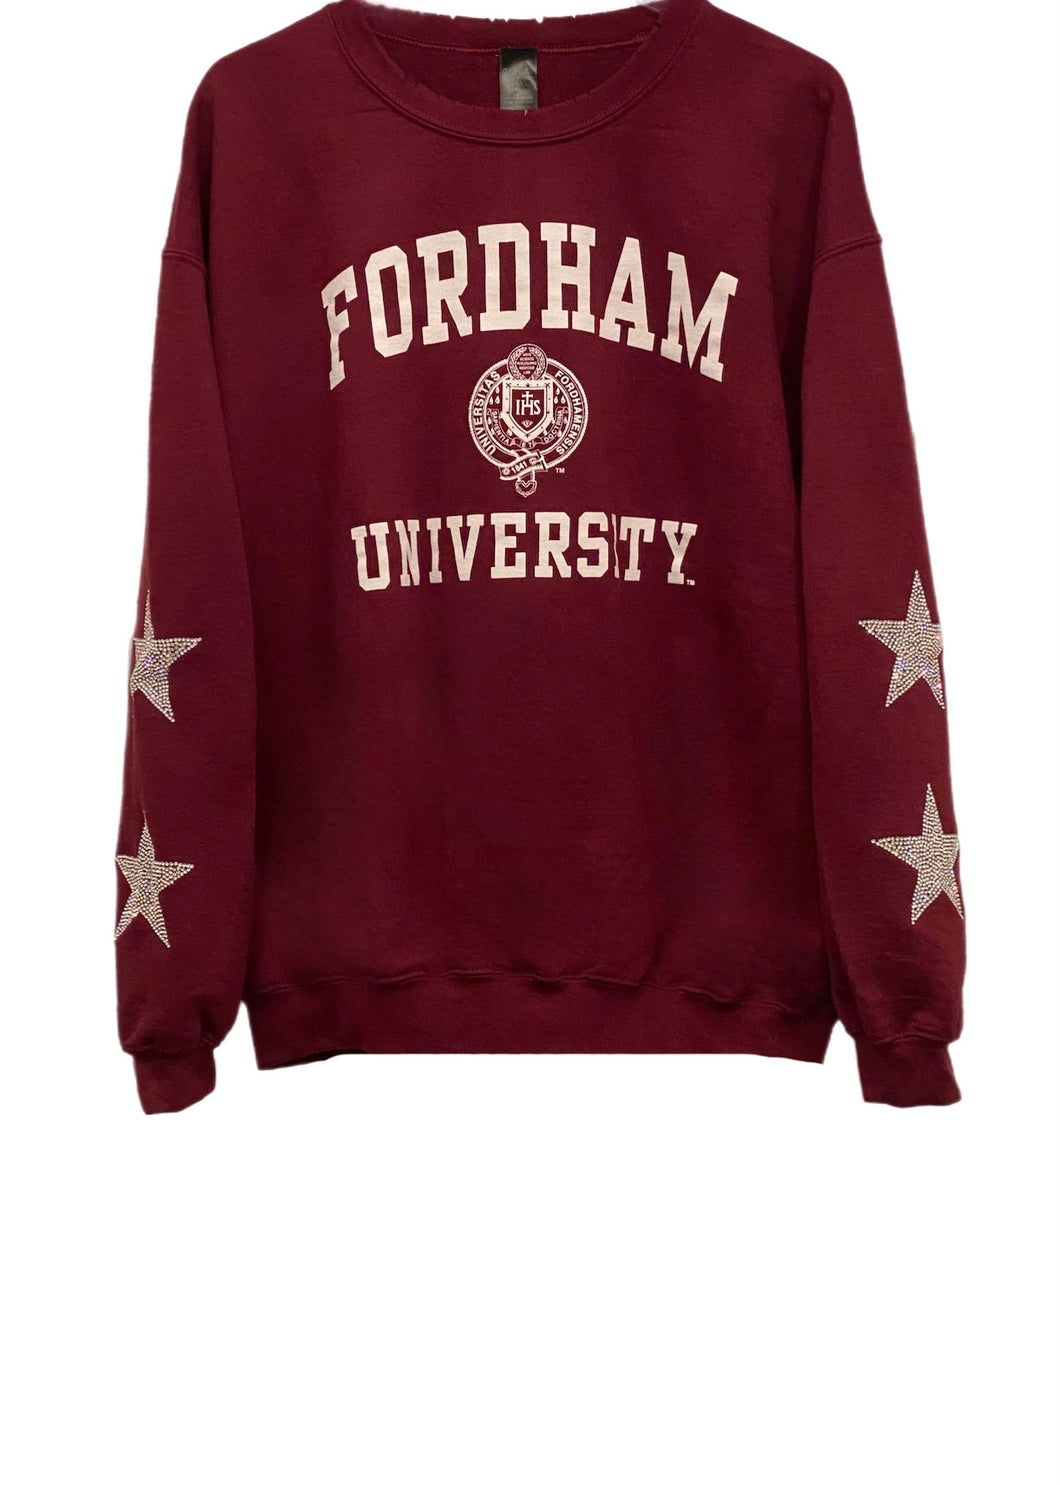 Fordham University, One of a KIND Vintage Sweatshirt with Crystal Star Design